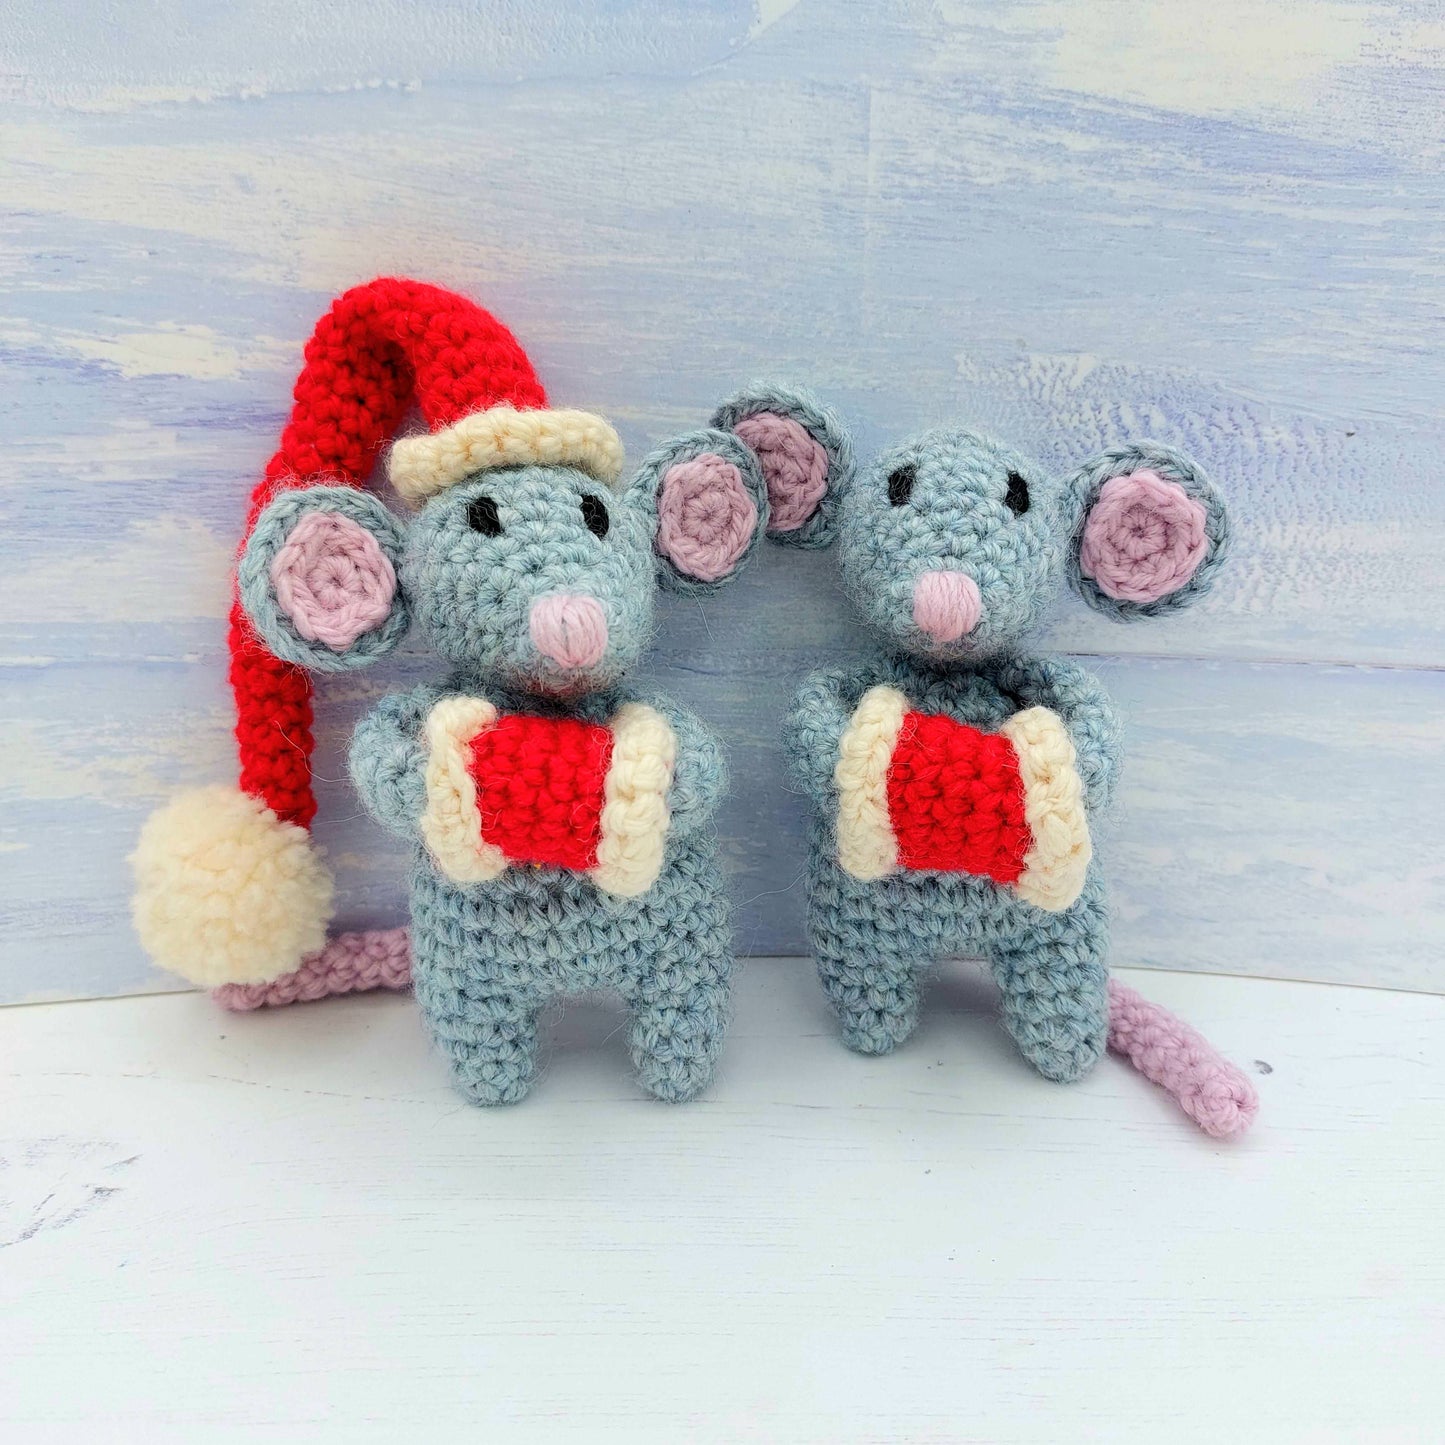 Two Crochet Christmas Mouse Ornaments